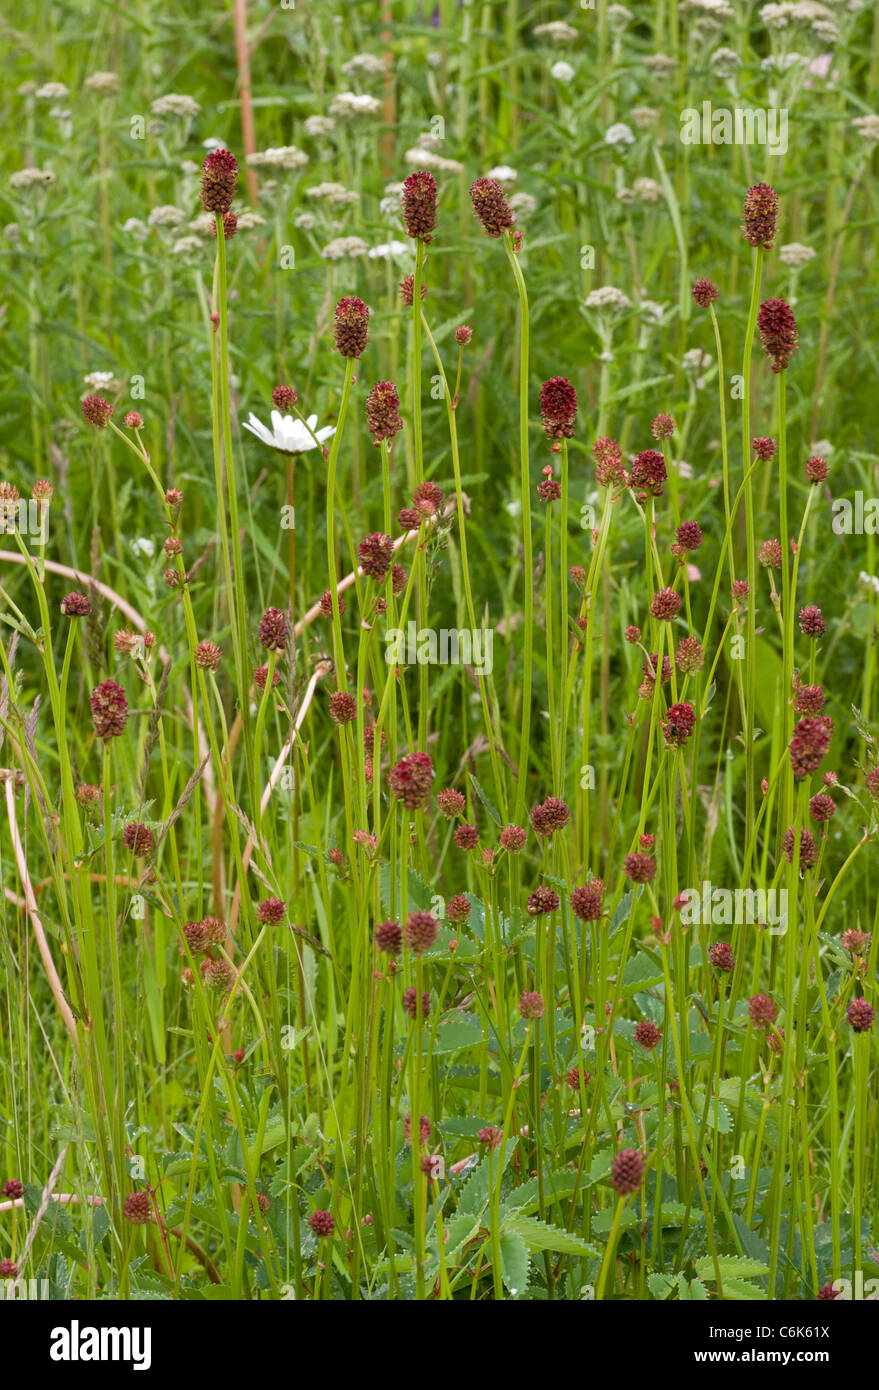 Great Burnet, Sanguisorba officinalis in flower, in damp hay meadow. Stock Photo